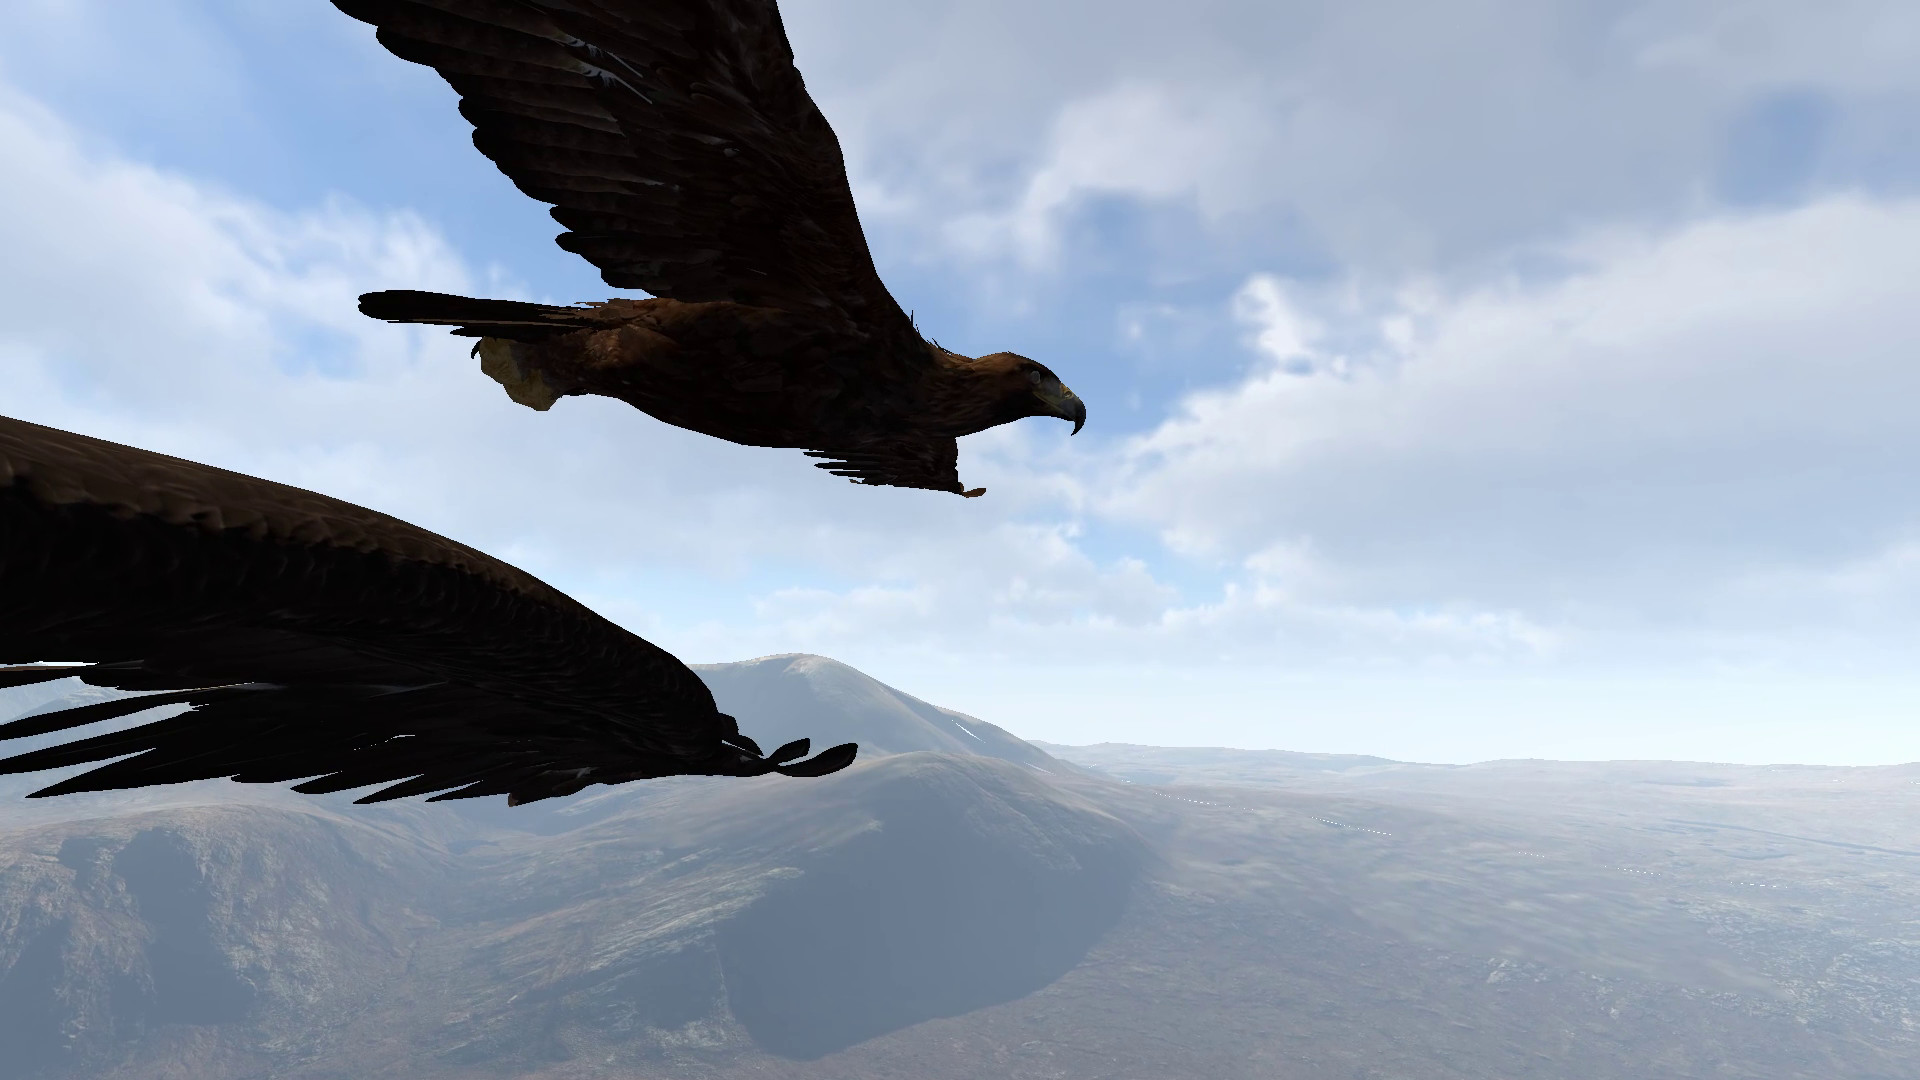 Aquila Bird Flight Simulator screenshot